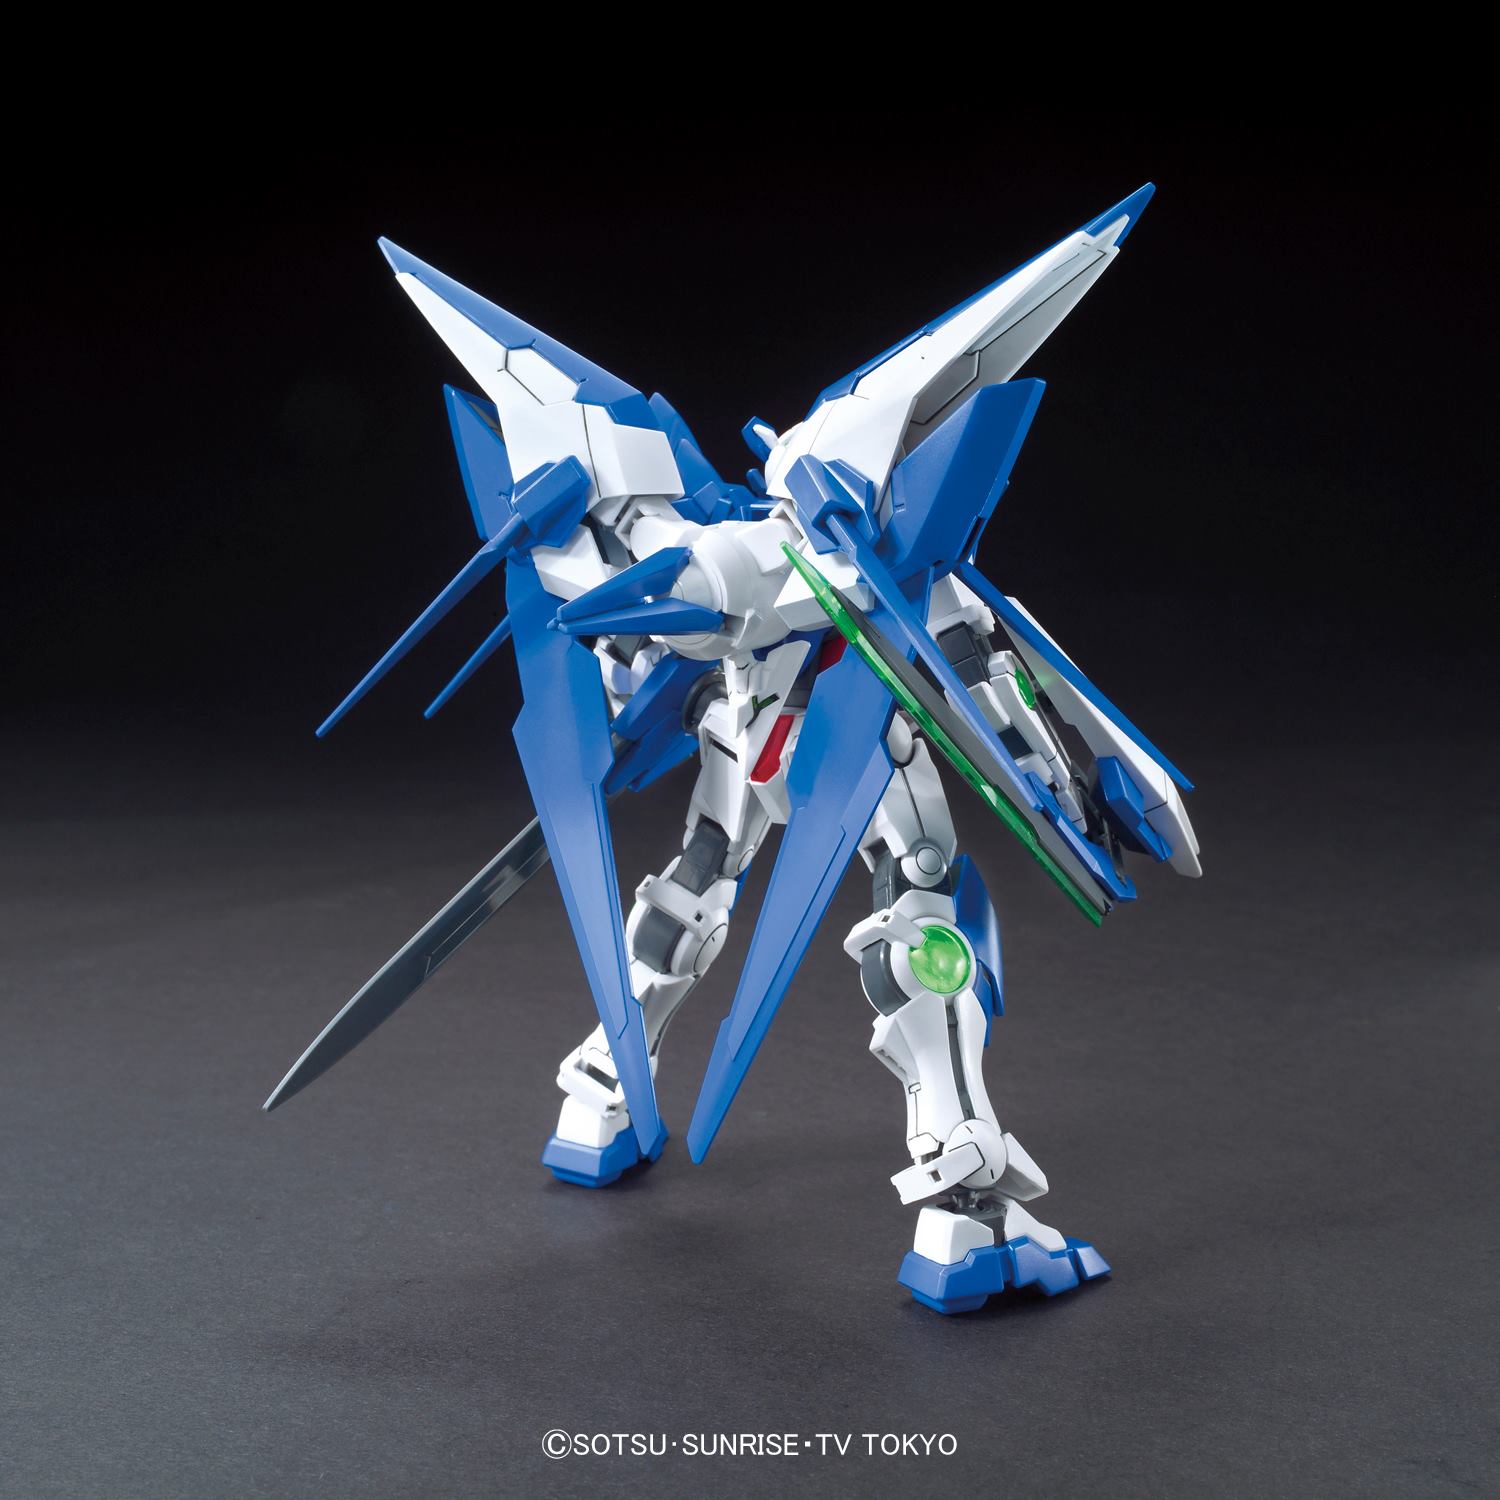 HGBF - PPGN-001 Gundam Amazing Exia